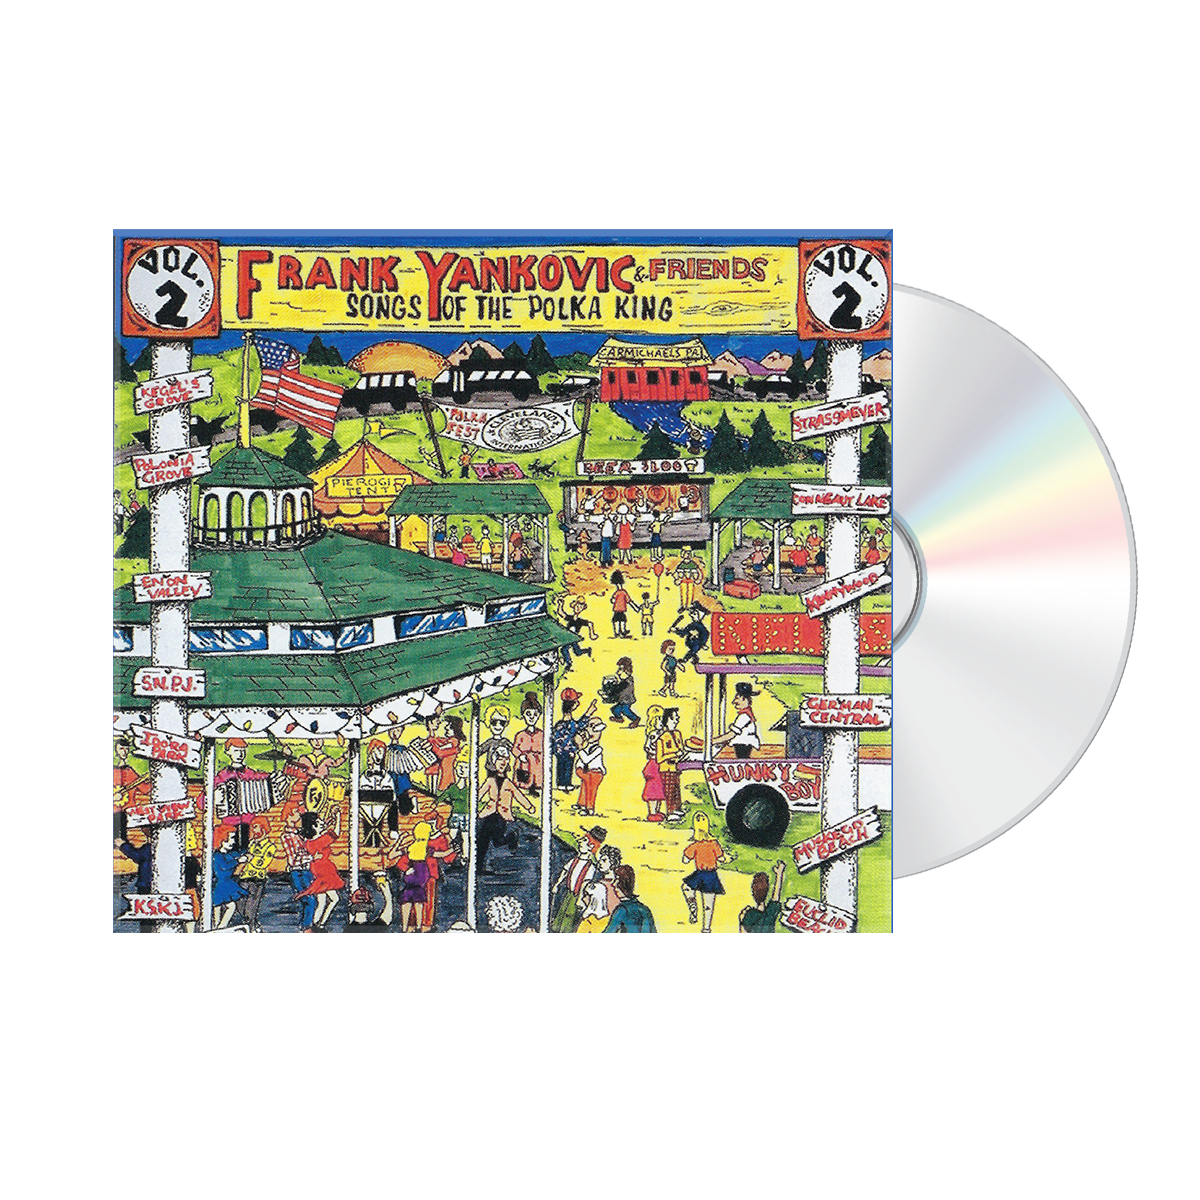 Frank Yankovic: Songs Of the Polka King Volume 2